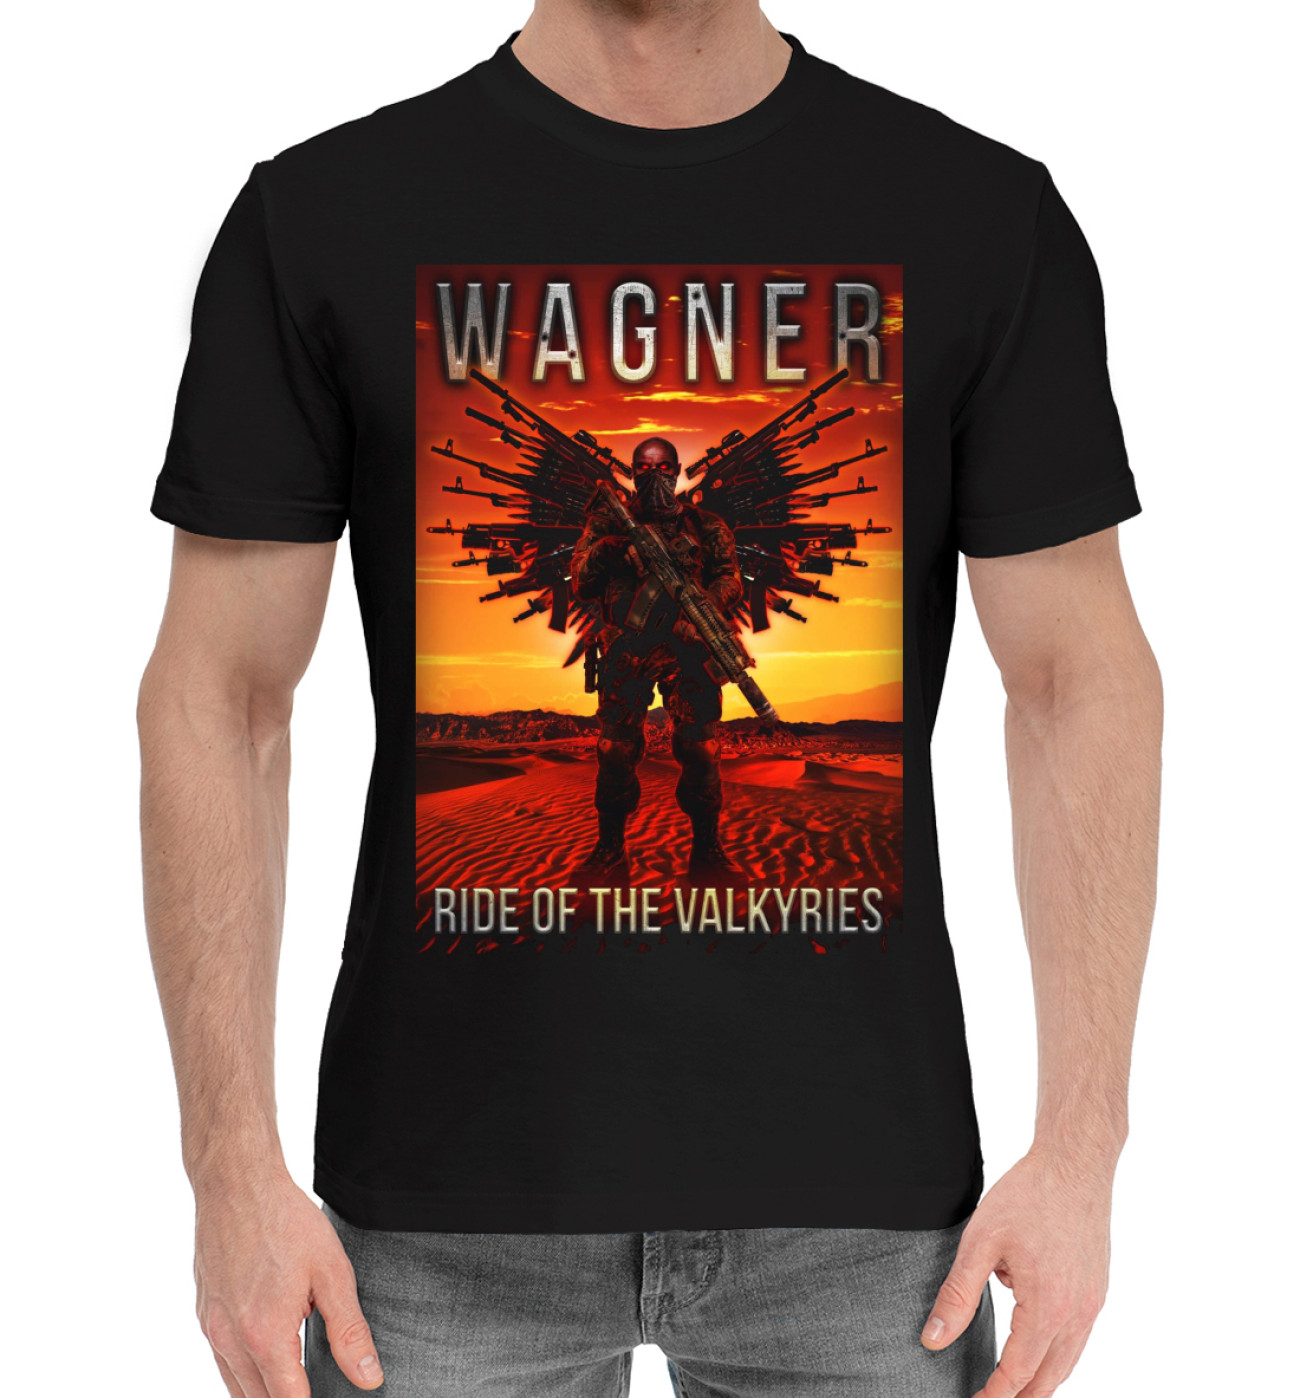 Мужская Хлопковая футболка Wagner ride of the valkyries, артикул: Z10-316236-hfu-2